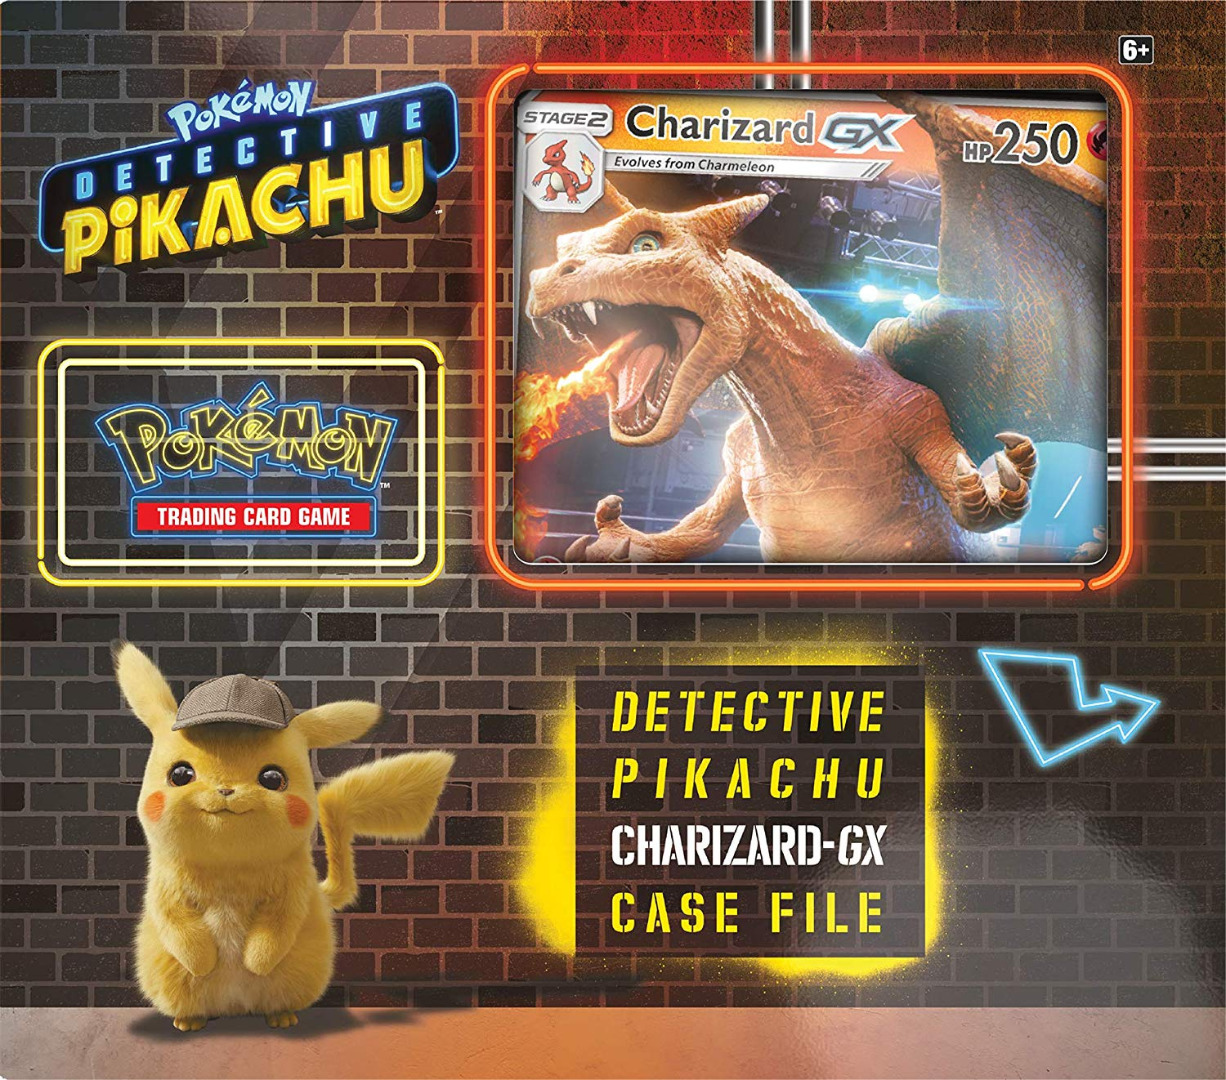 Pokémon Detective Pikachu Charizard-GX (English)